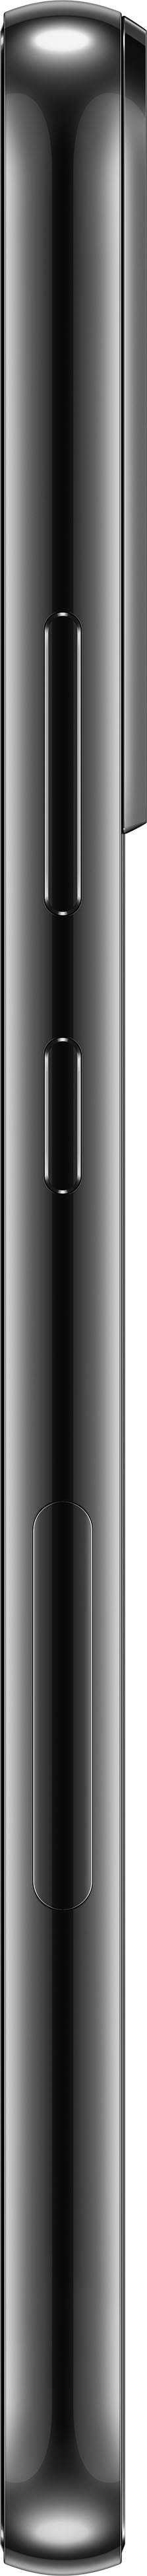 Samsung - Galaxy S22+ 128GB - Phantom Black (Verizon)_6